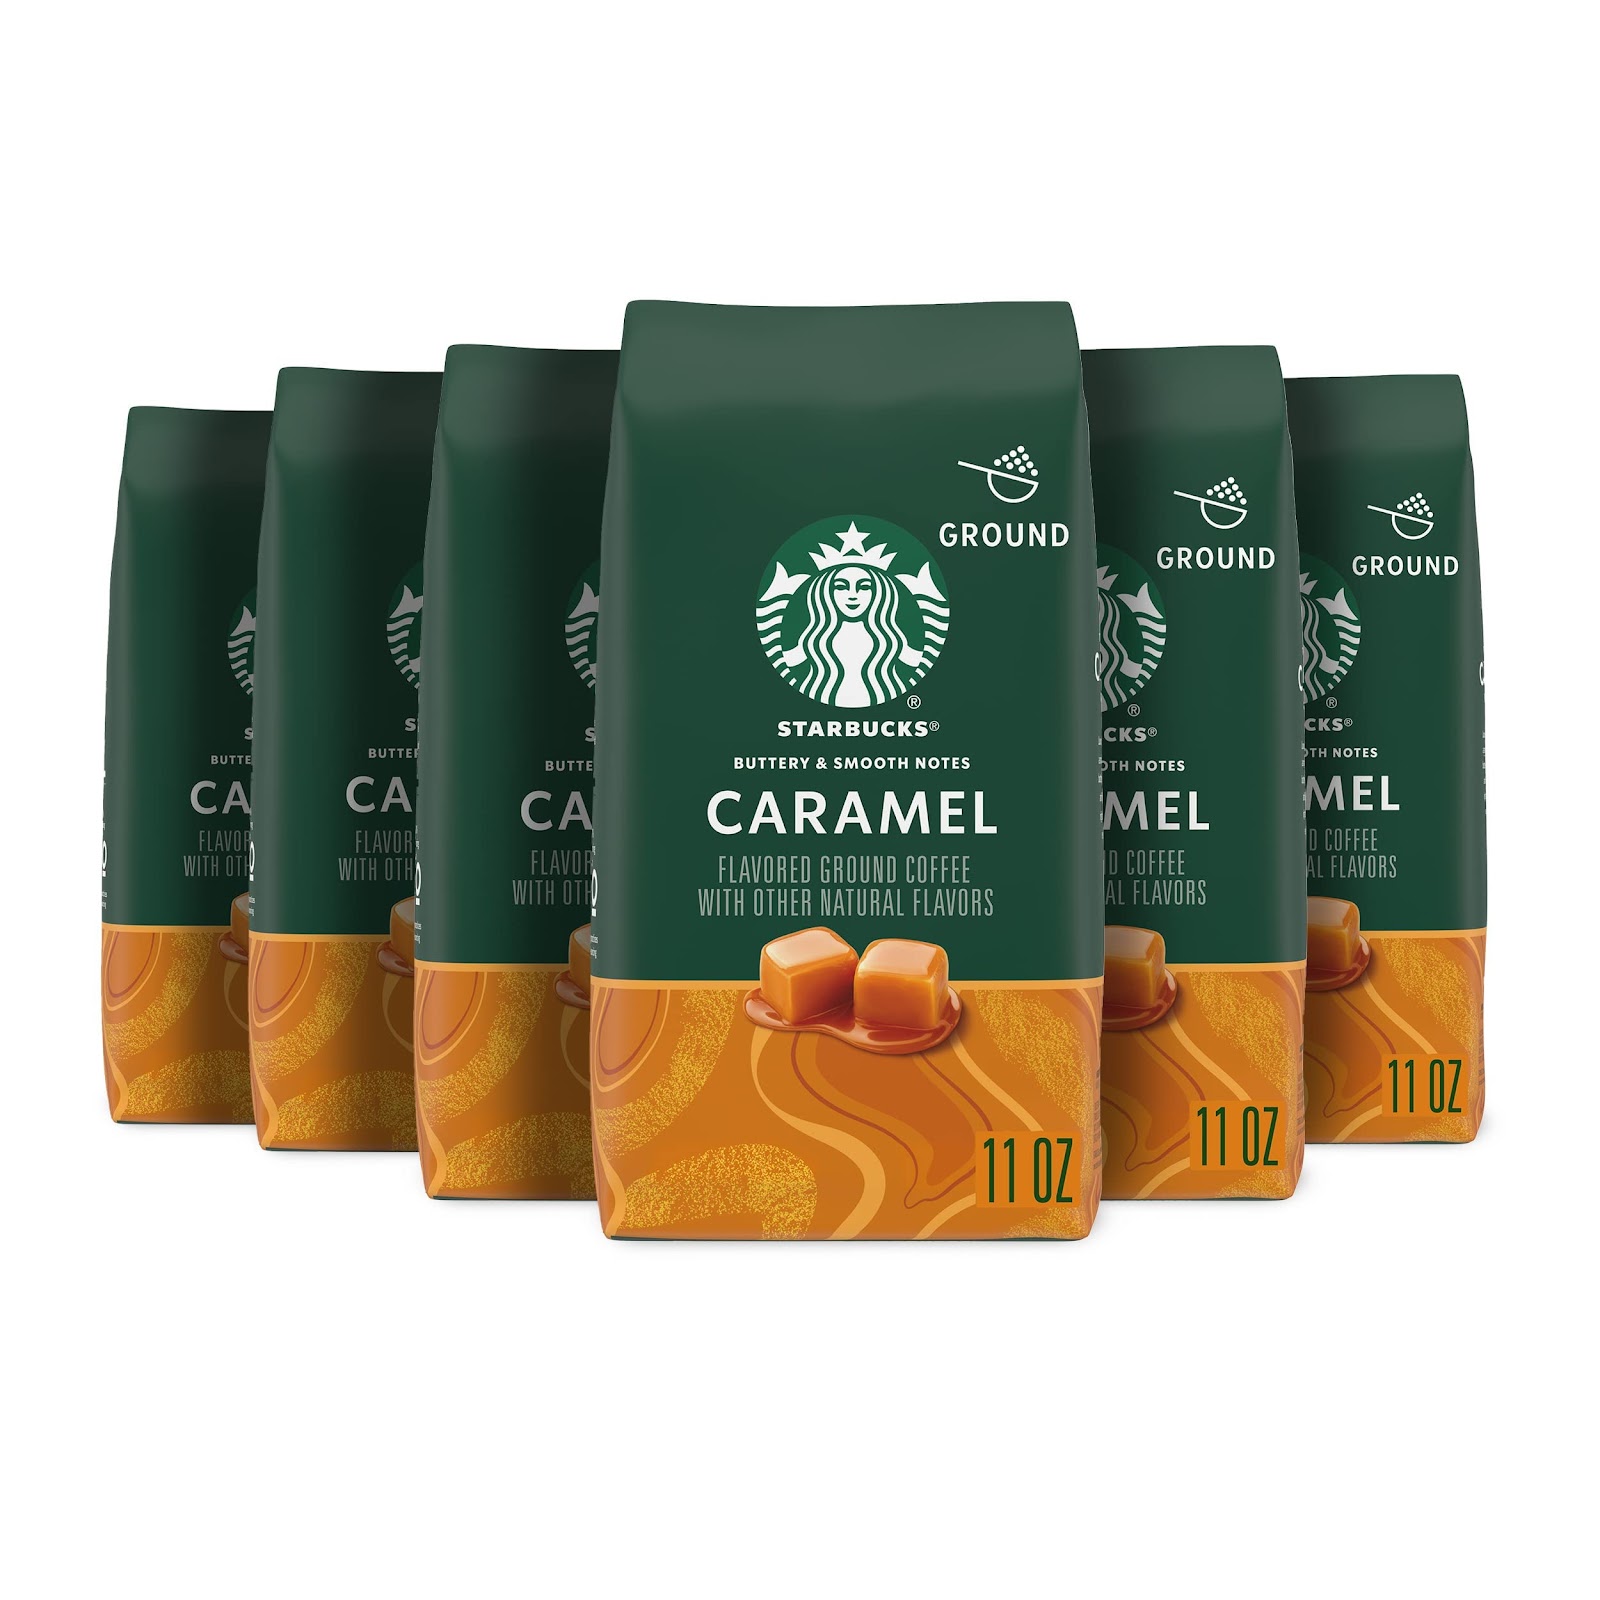 Starbucks Caramel Flavored Ground Coffee